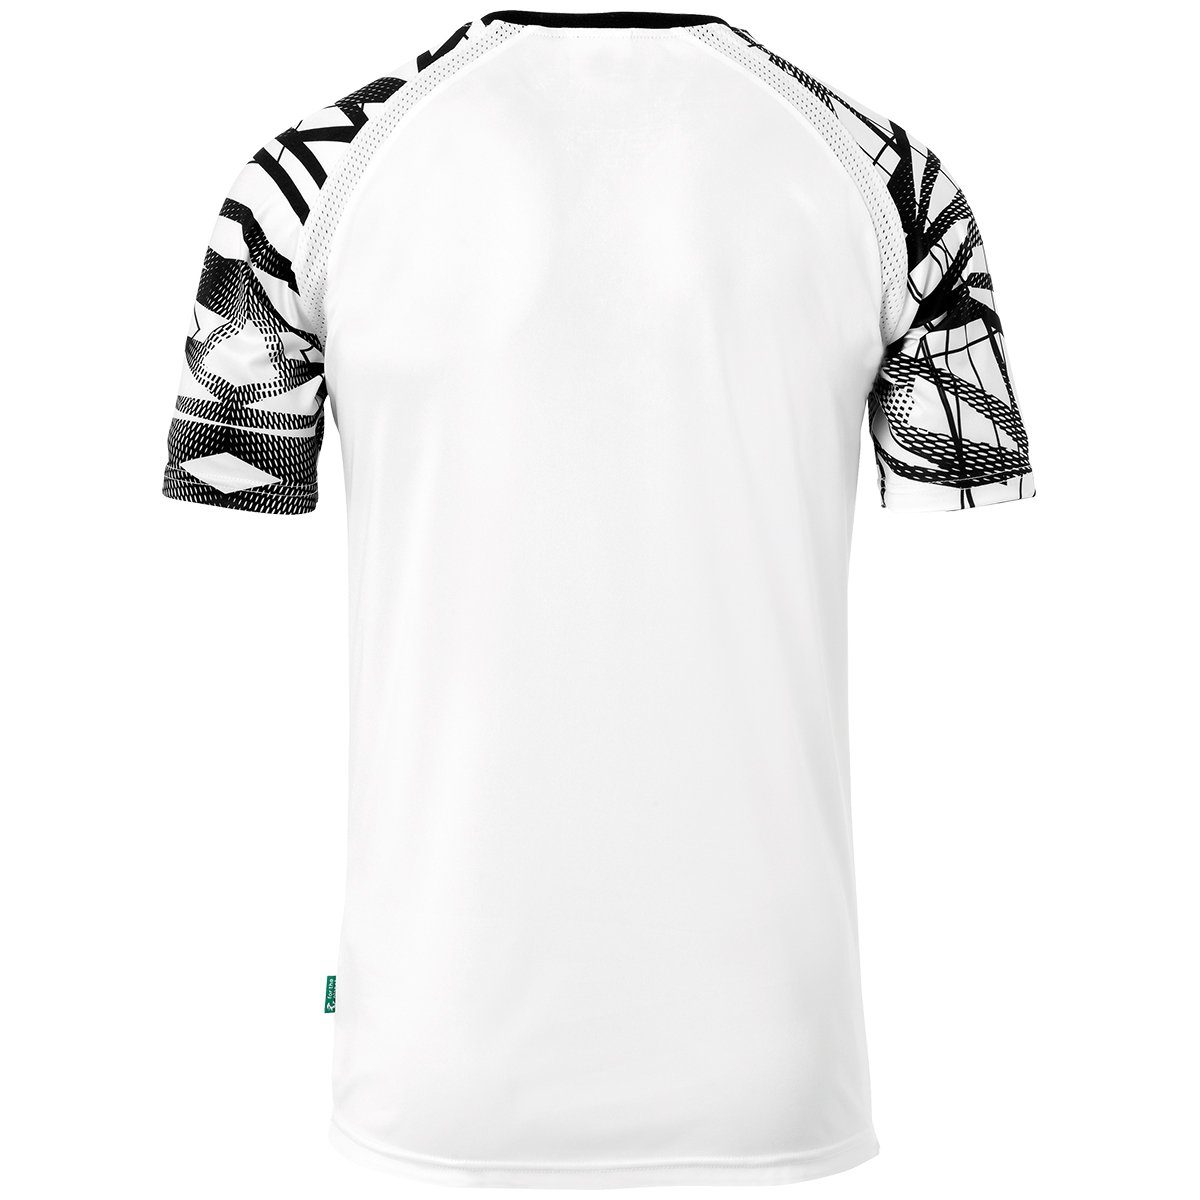 uhlsport Trainingsshirt uhlsport Trainings-T-Shirt GOAL atmungsaktiv weiß/schwarz KURZARM TRIKOT 25